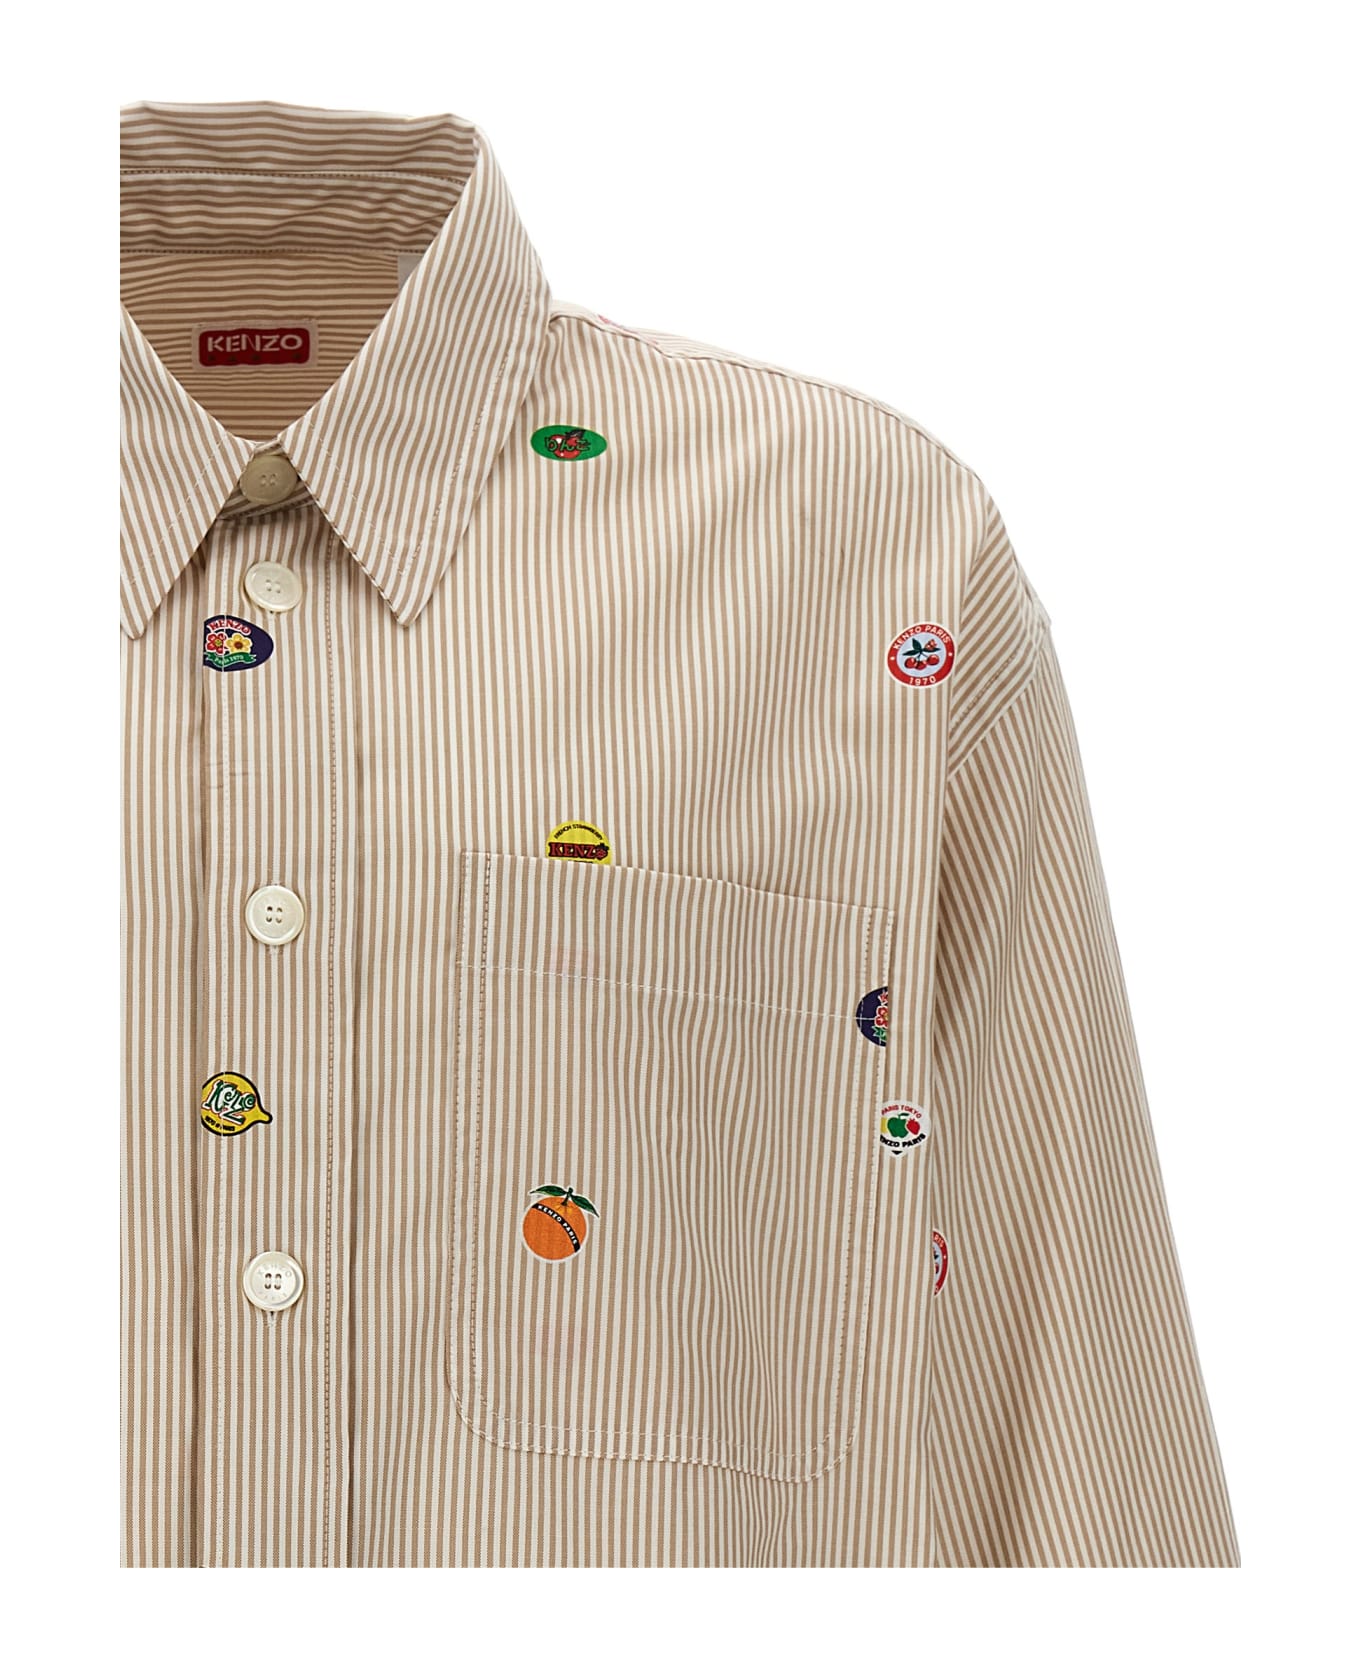 Kenzo Fruit Stickers Shirt - Beige